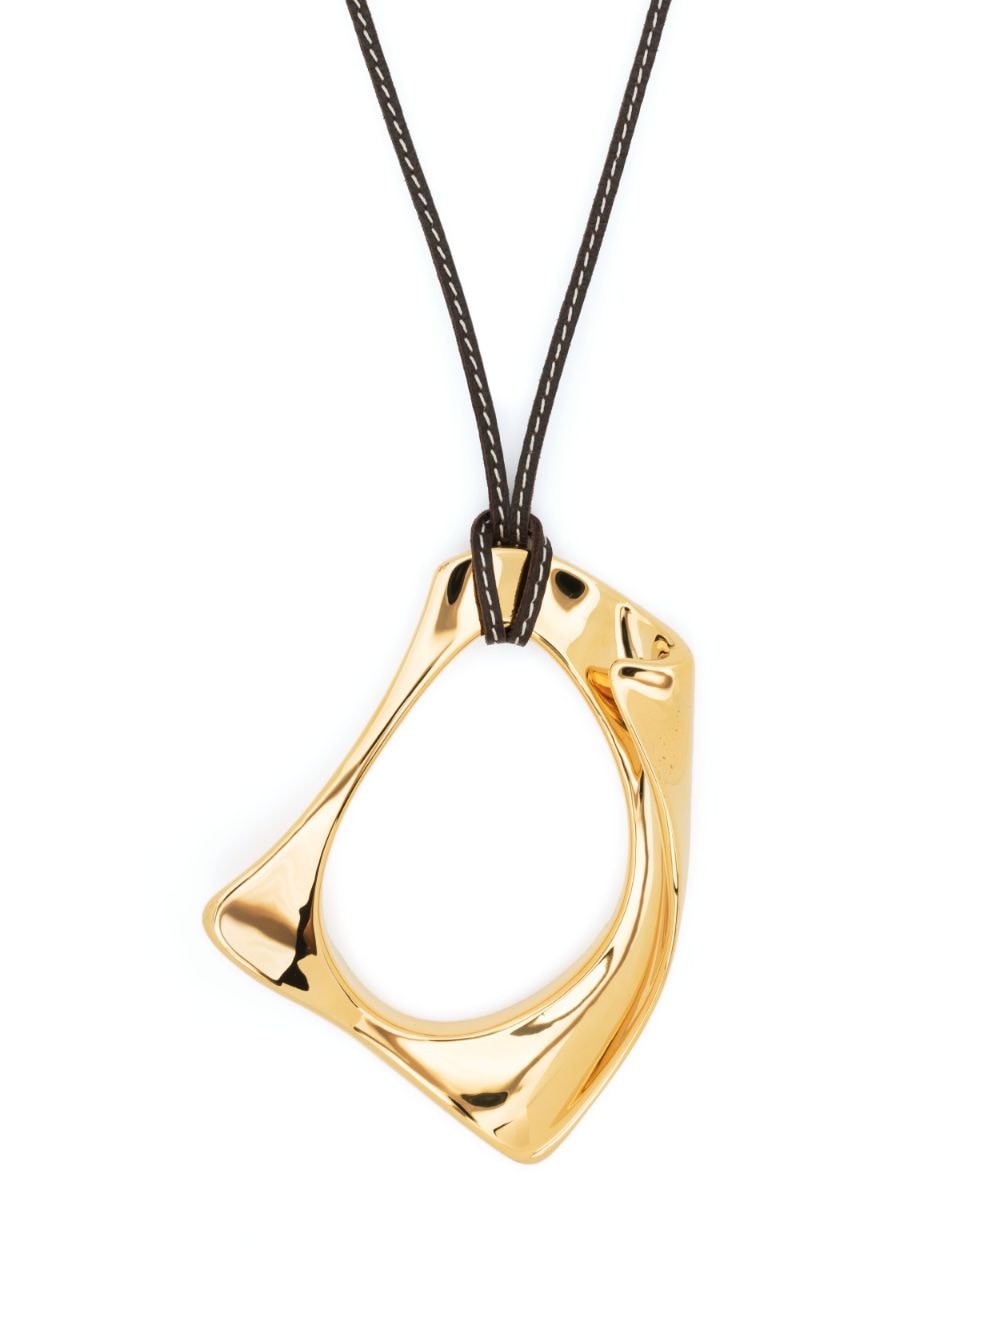 Hepworth oversize-pendant necklace